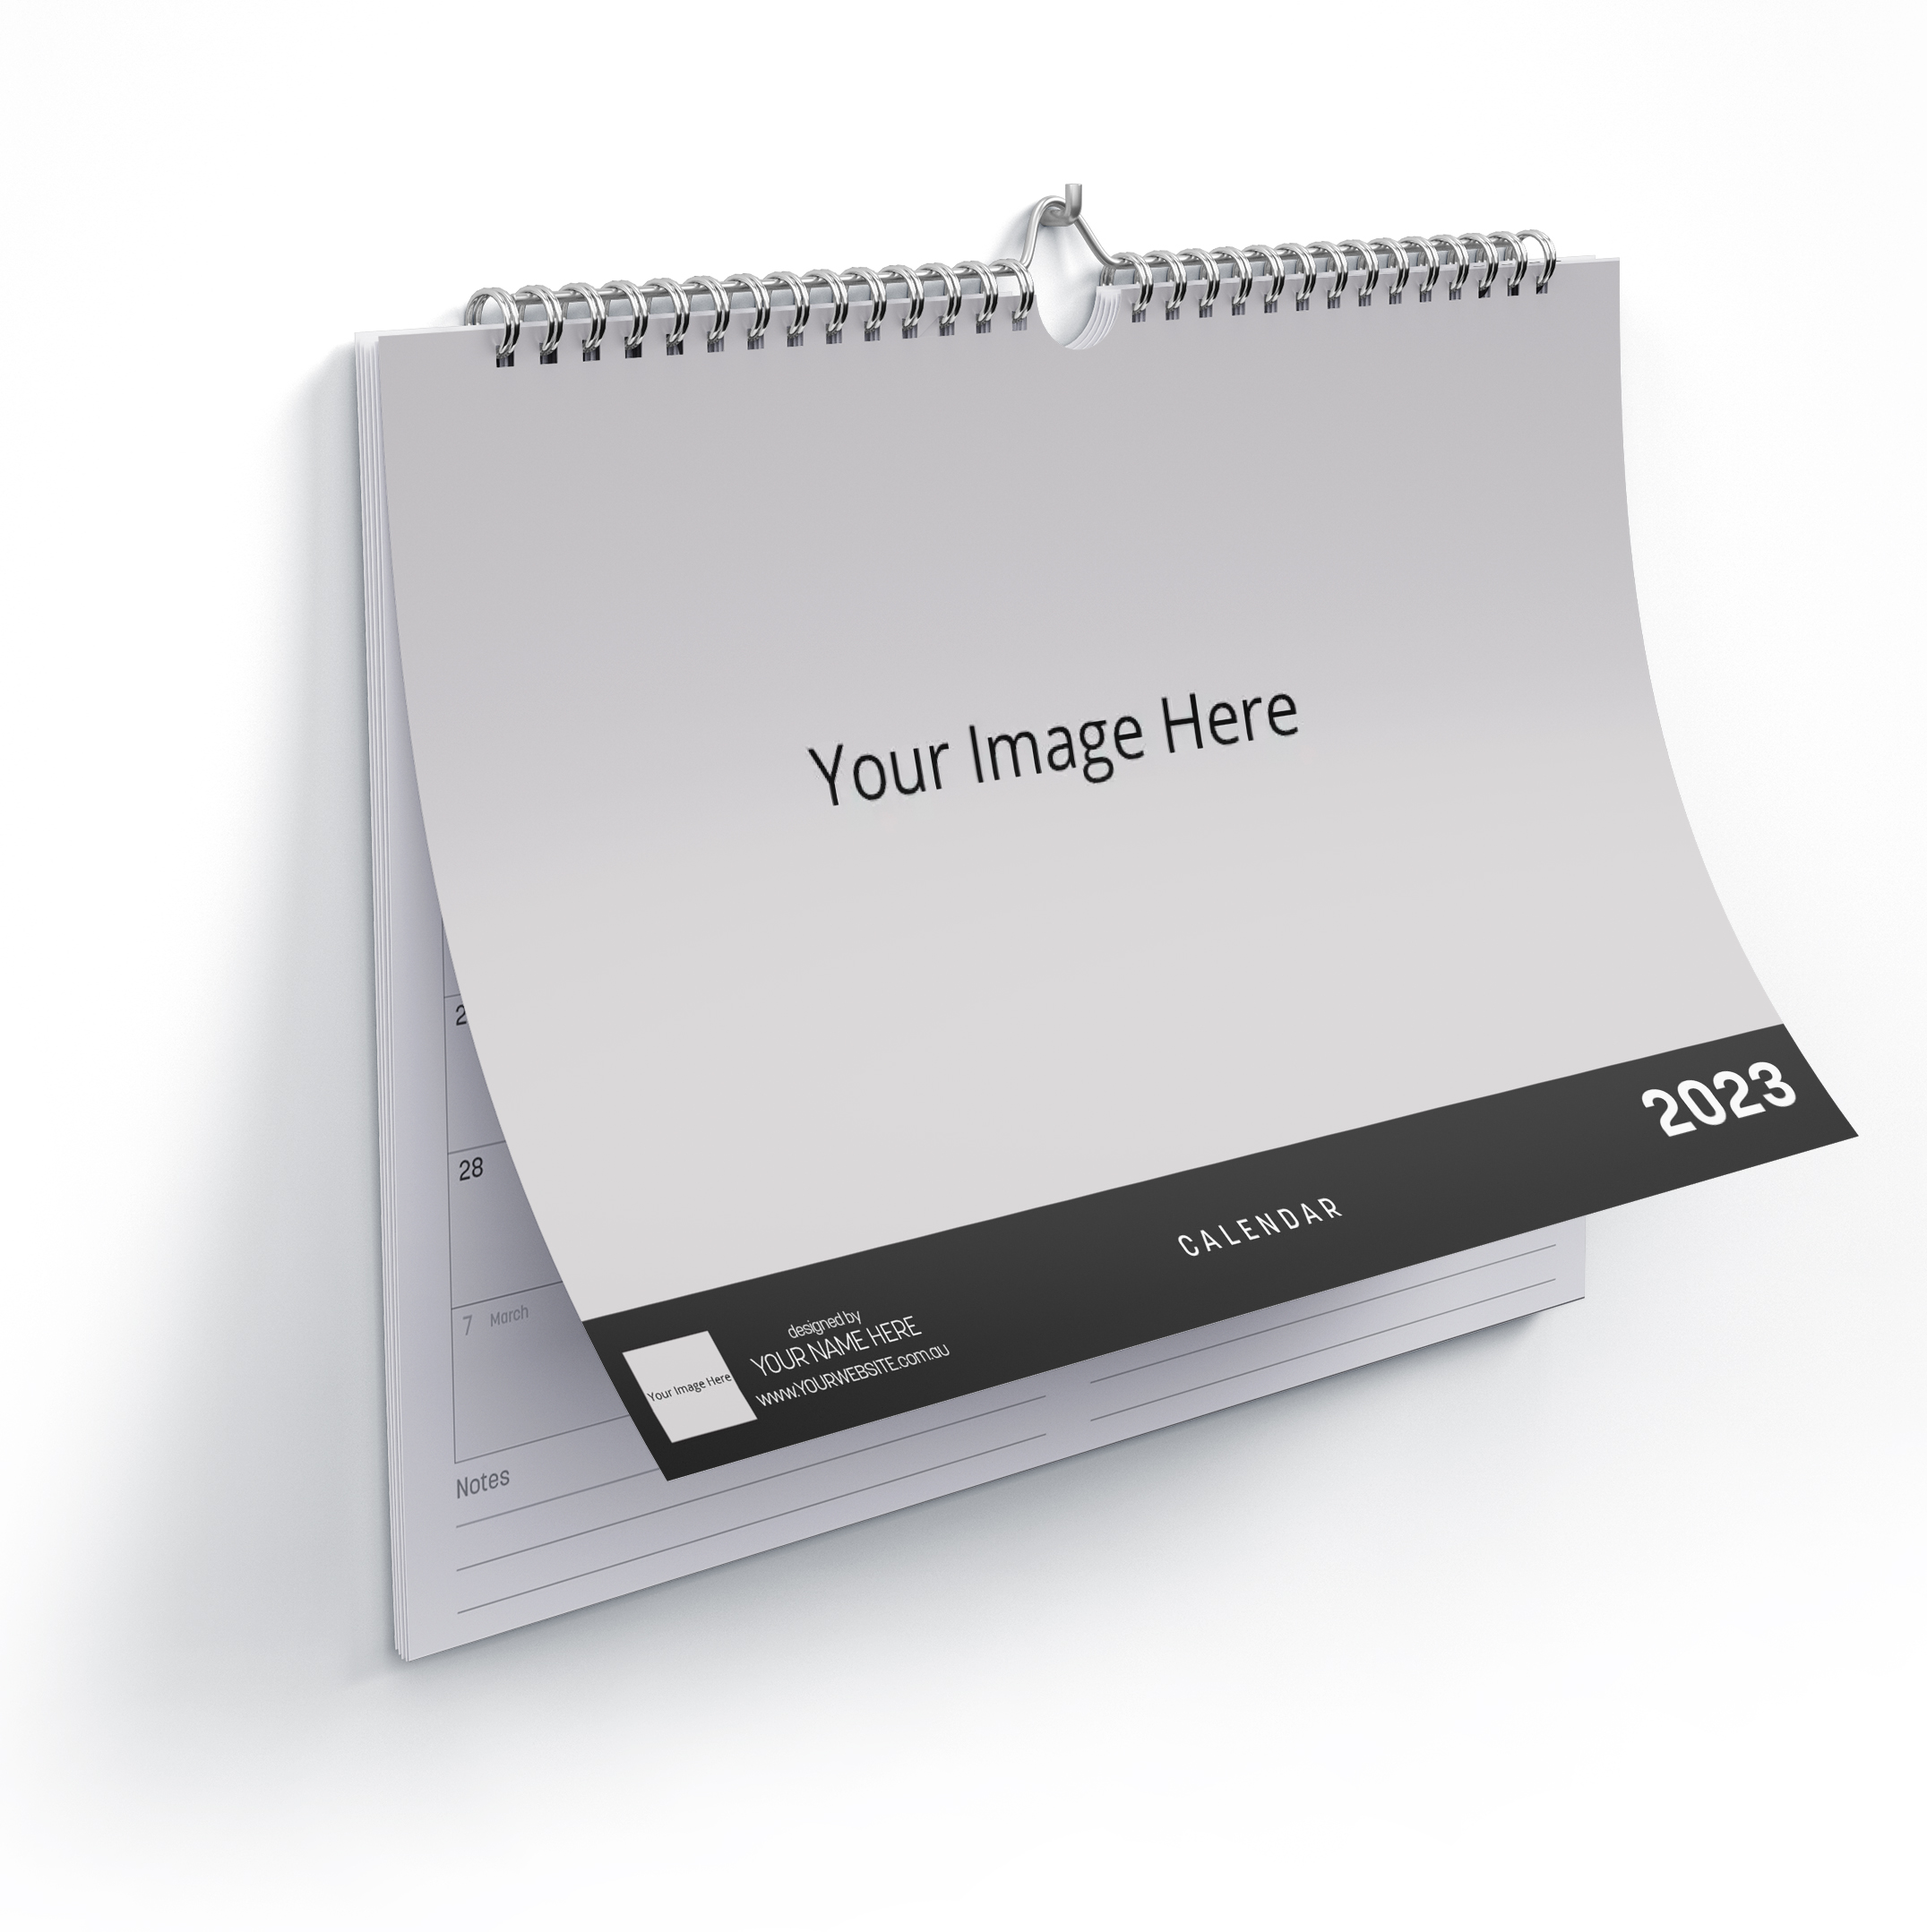 2023 Calendar Template Printing File for Adobe InDesign - Julian